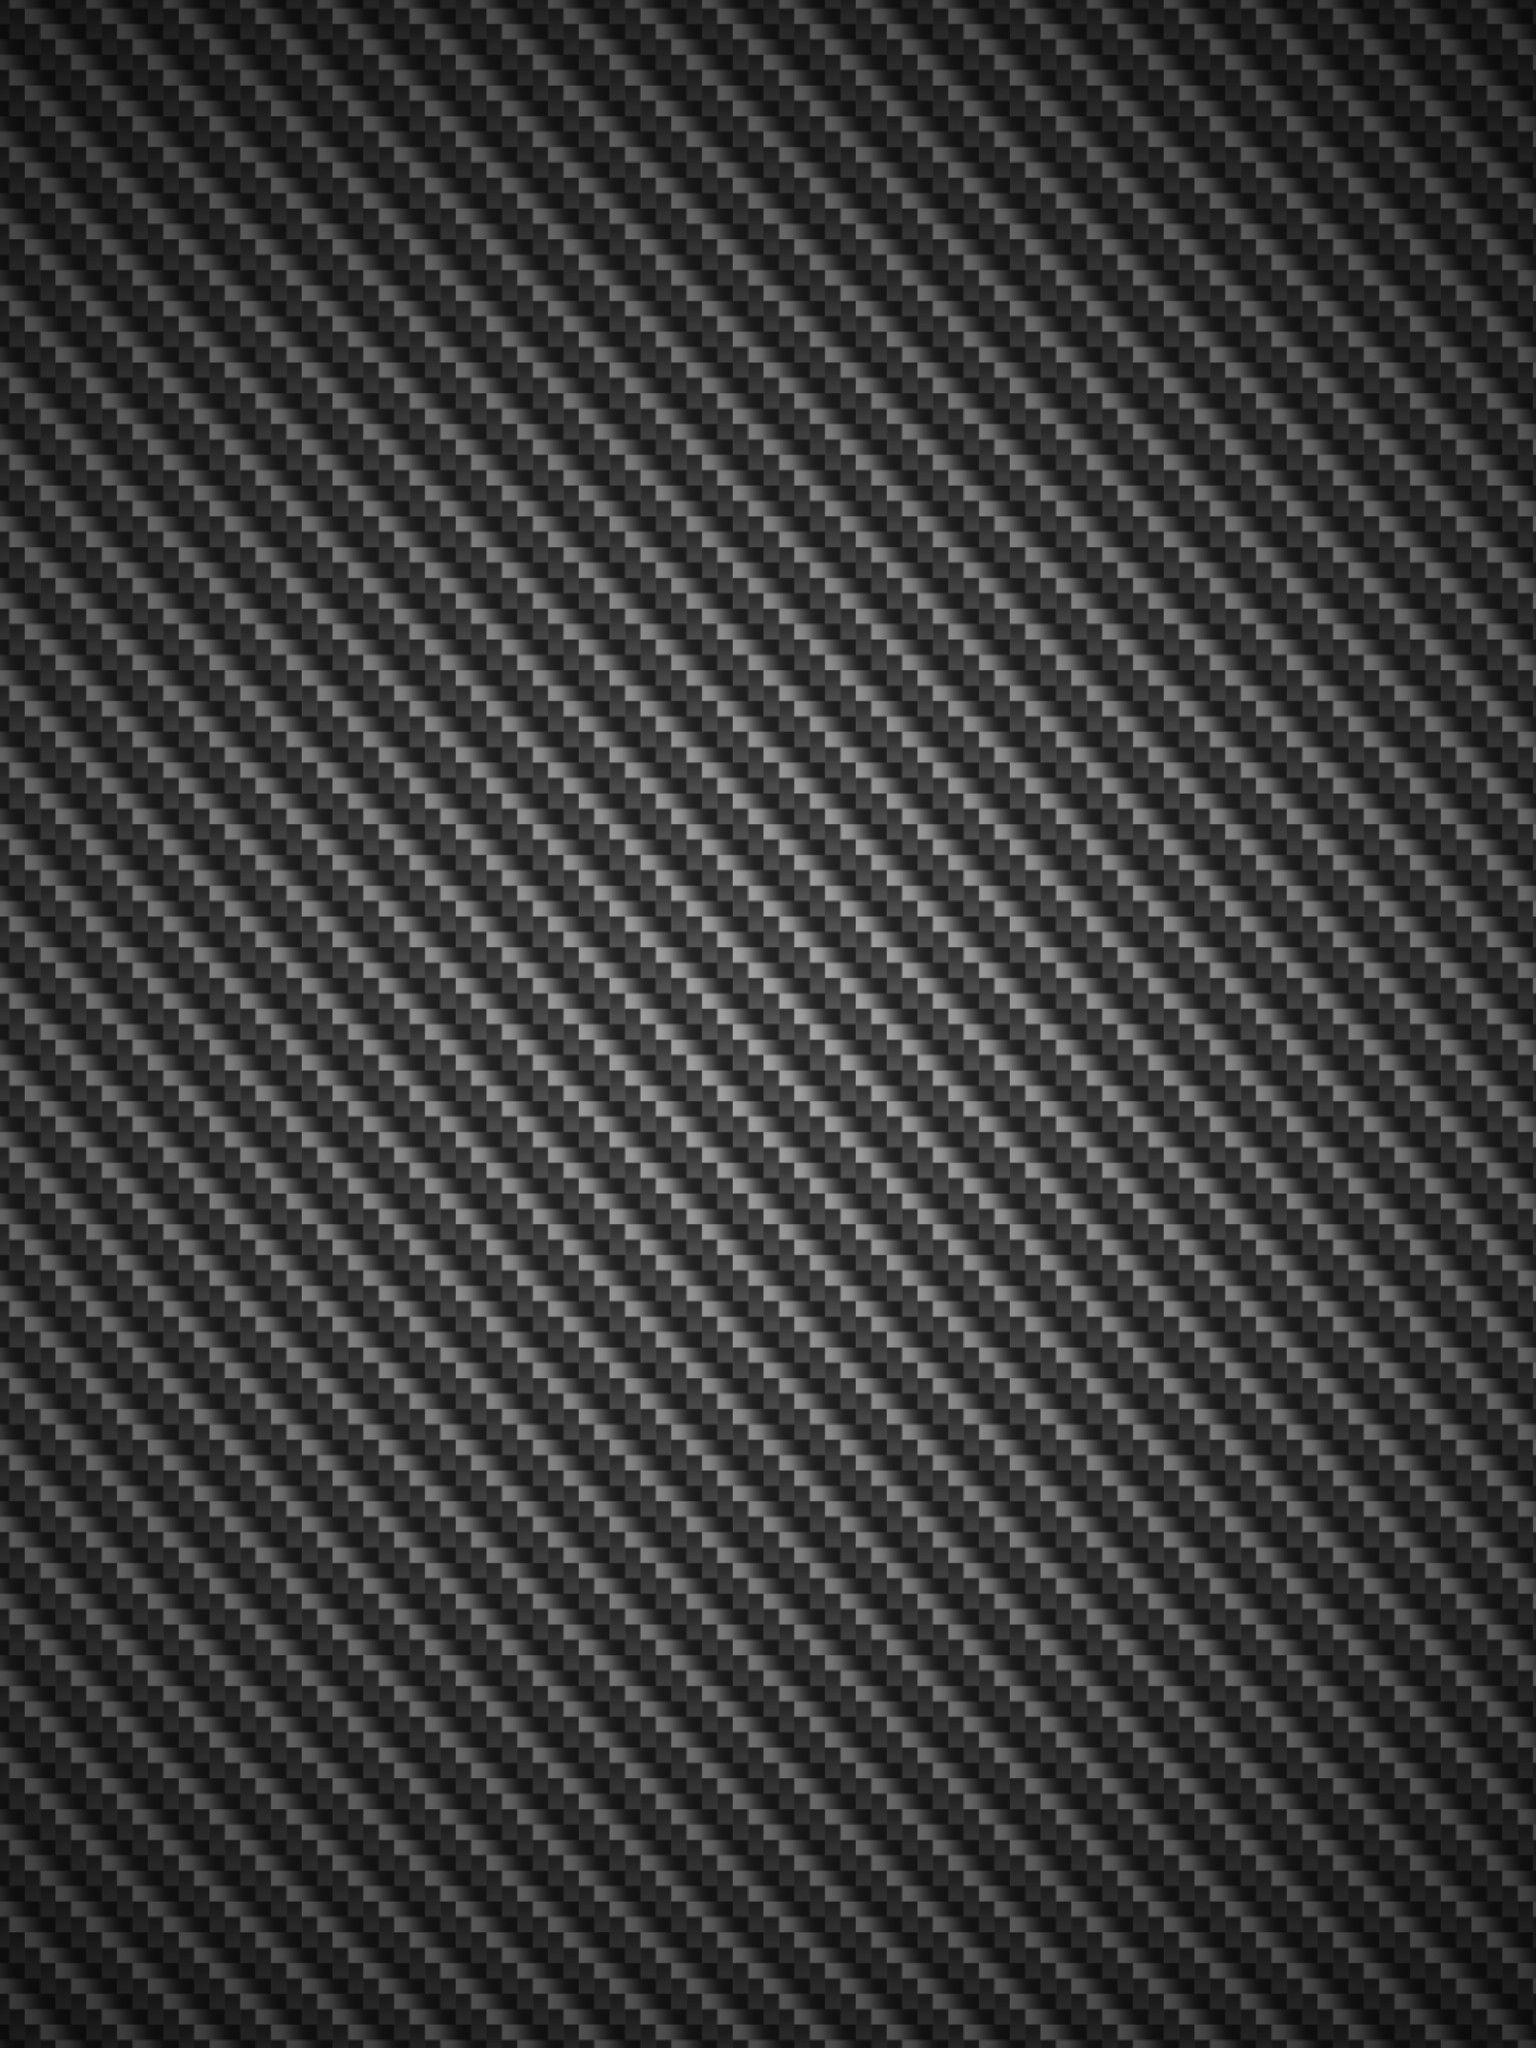 Black Carbon Fiber Wallpaper Free Black Carbon Fiber Background